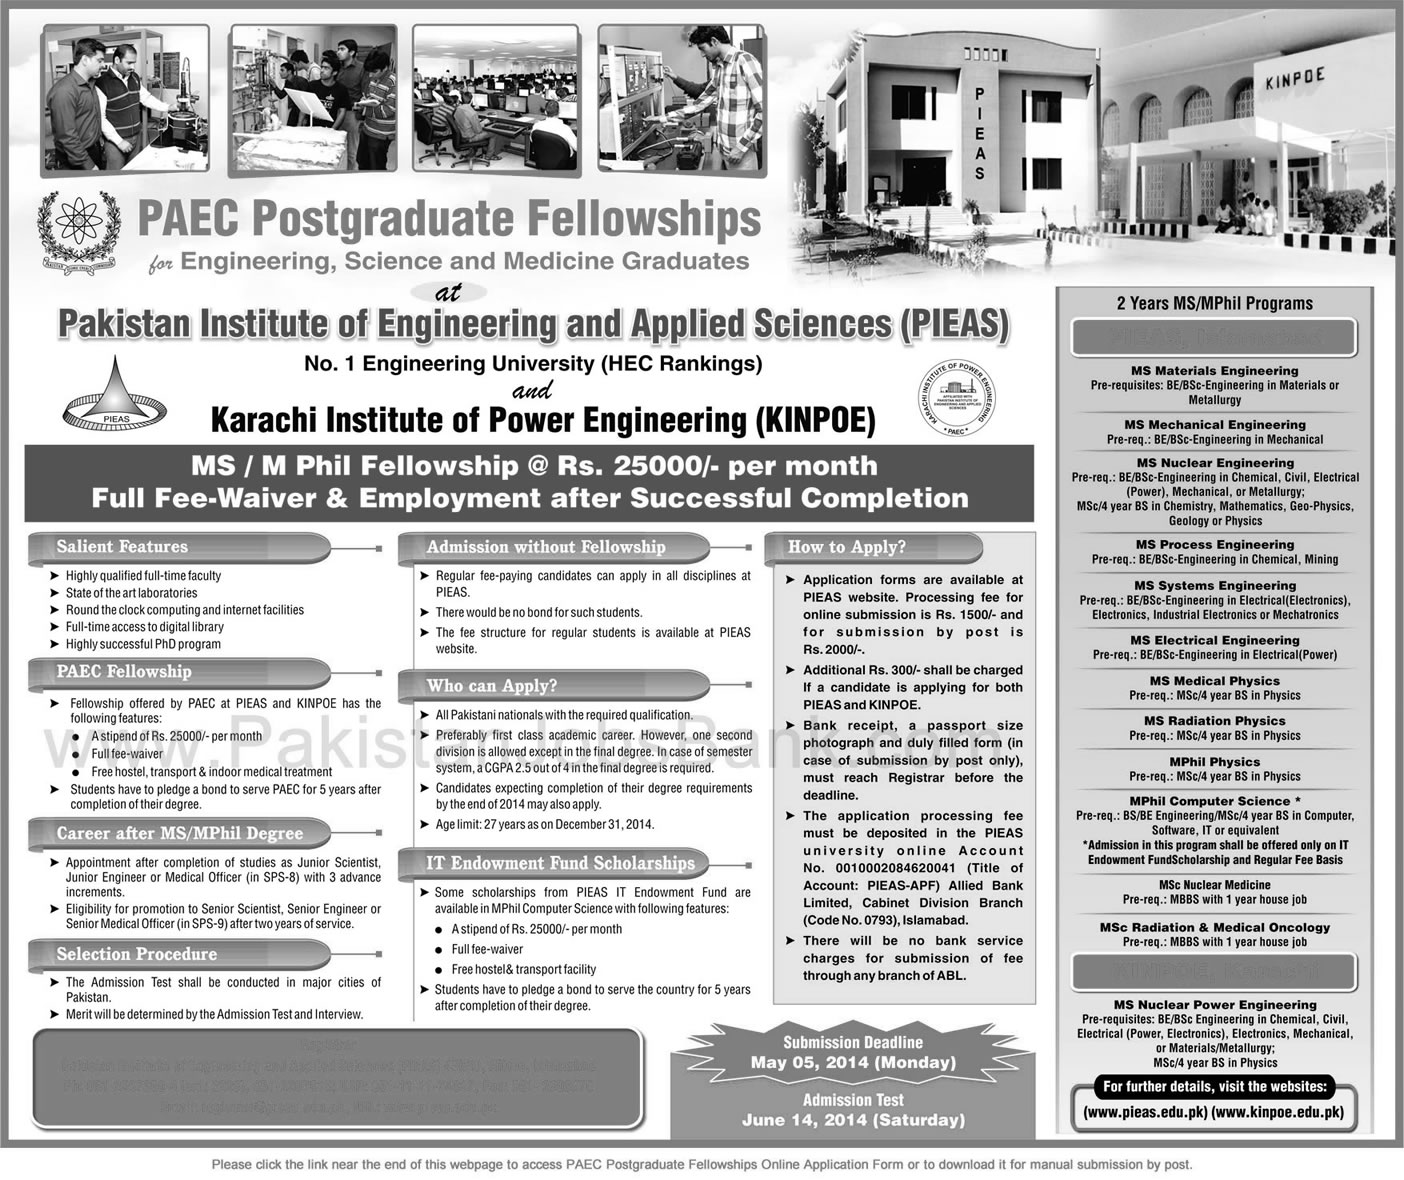 Pakistan Atomic Energy Commission Fellowships 2014 Postgraduate / MS